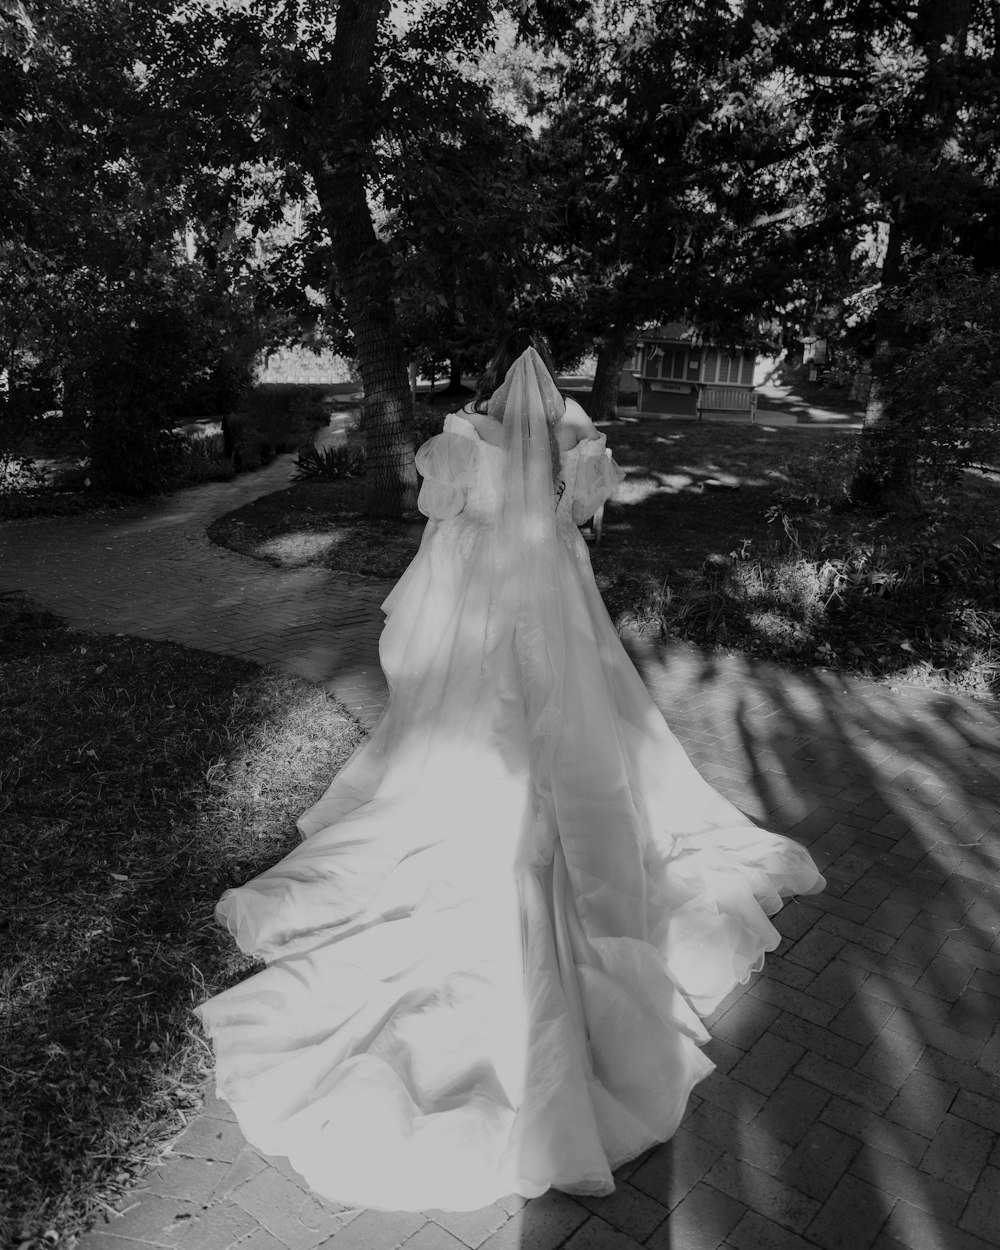 a woman in a wedding dress walking down a path